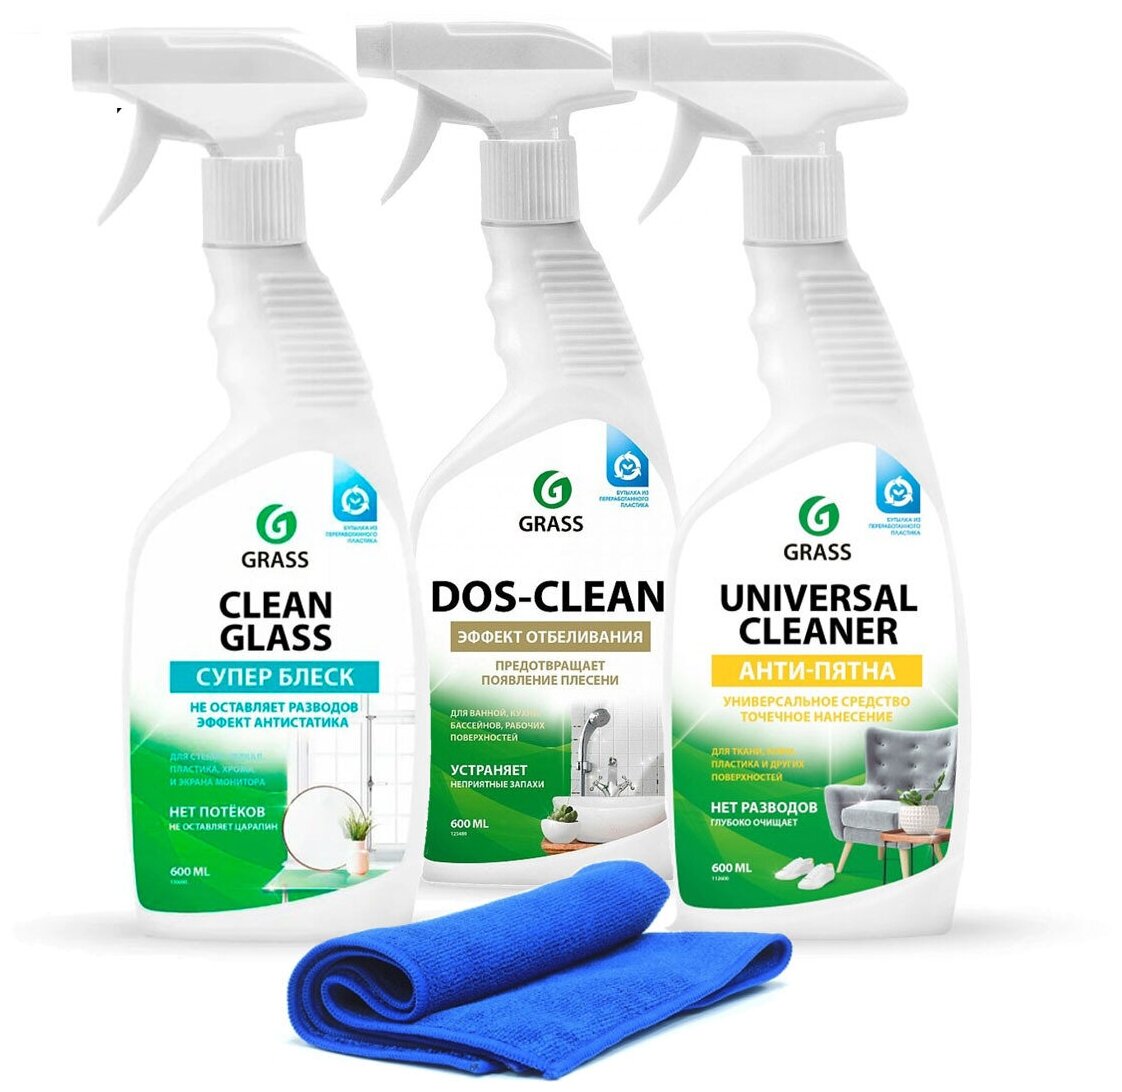 Набор для уборки дома Grass : Clean glass, Universal Cleaner, Dos-clean и салфетка из микрофибры